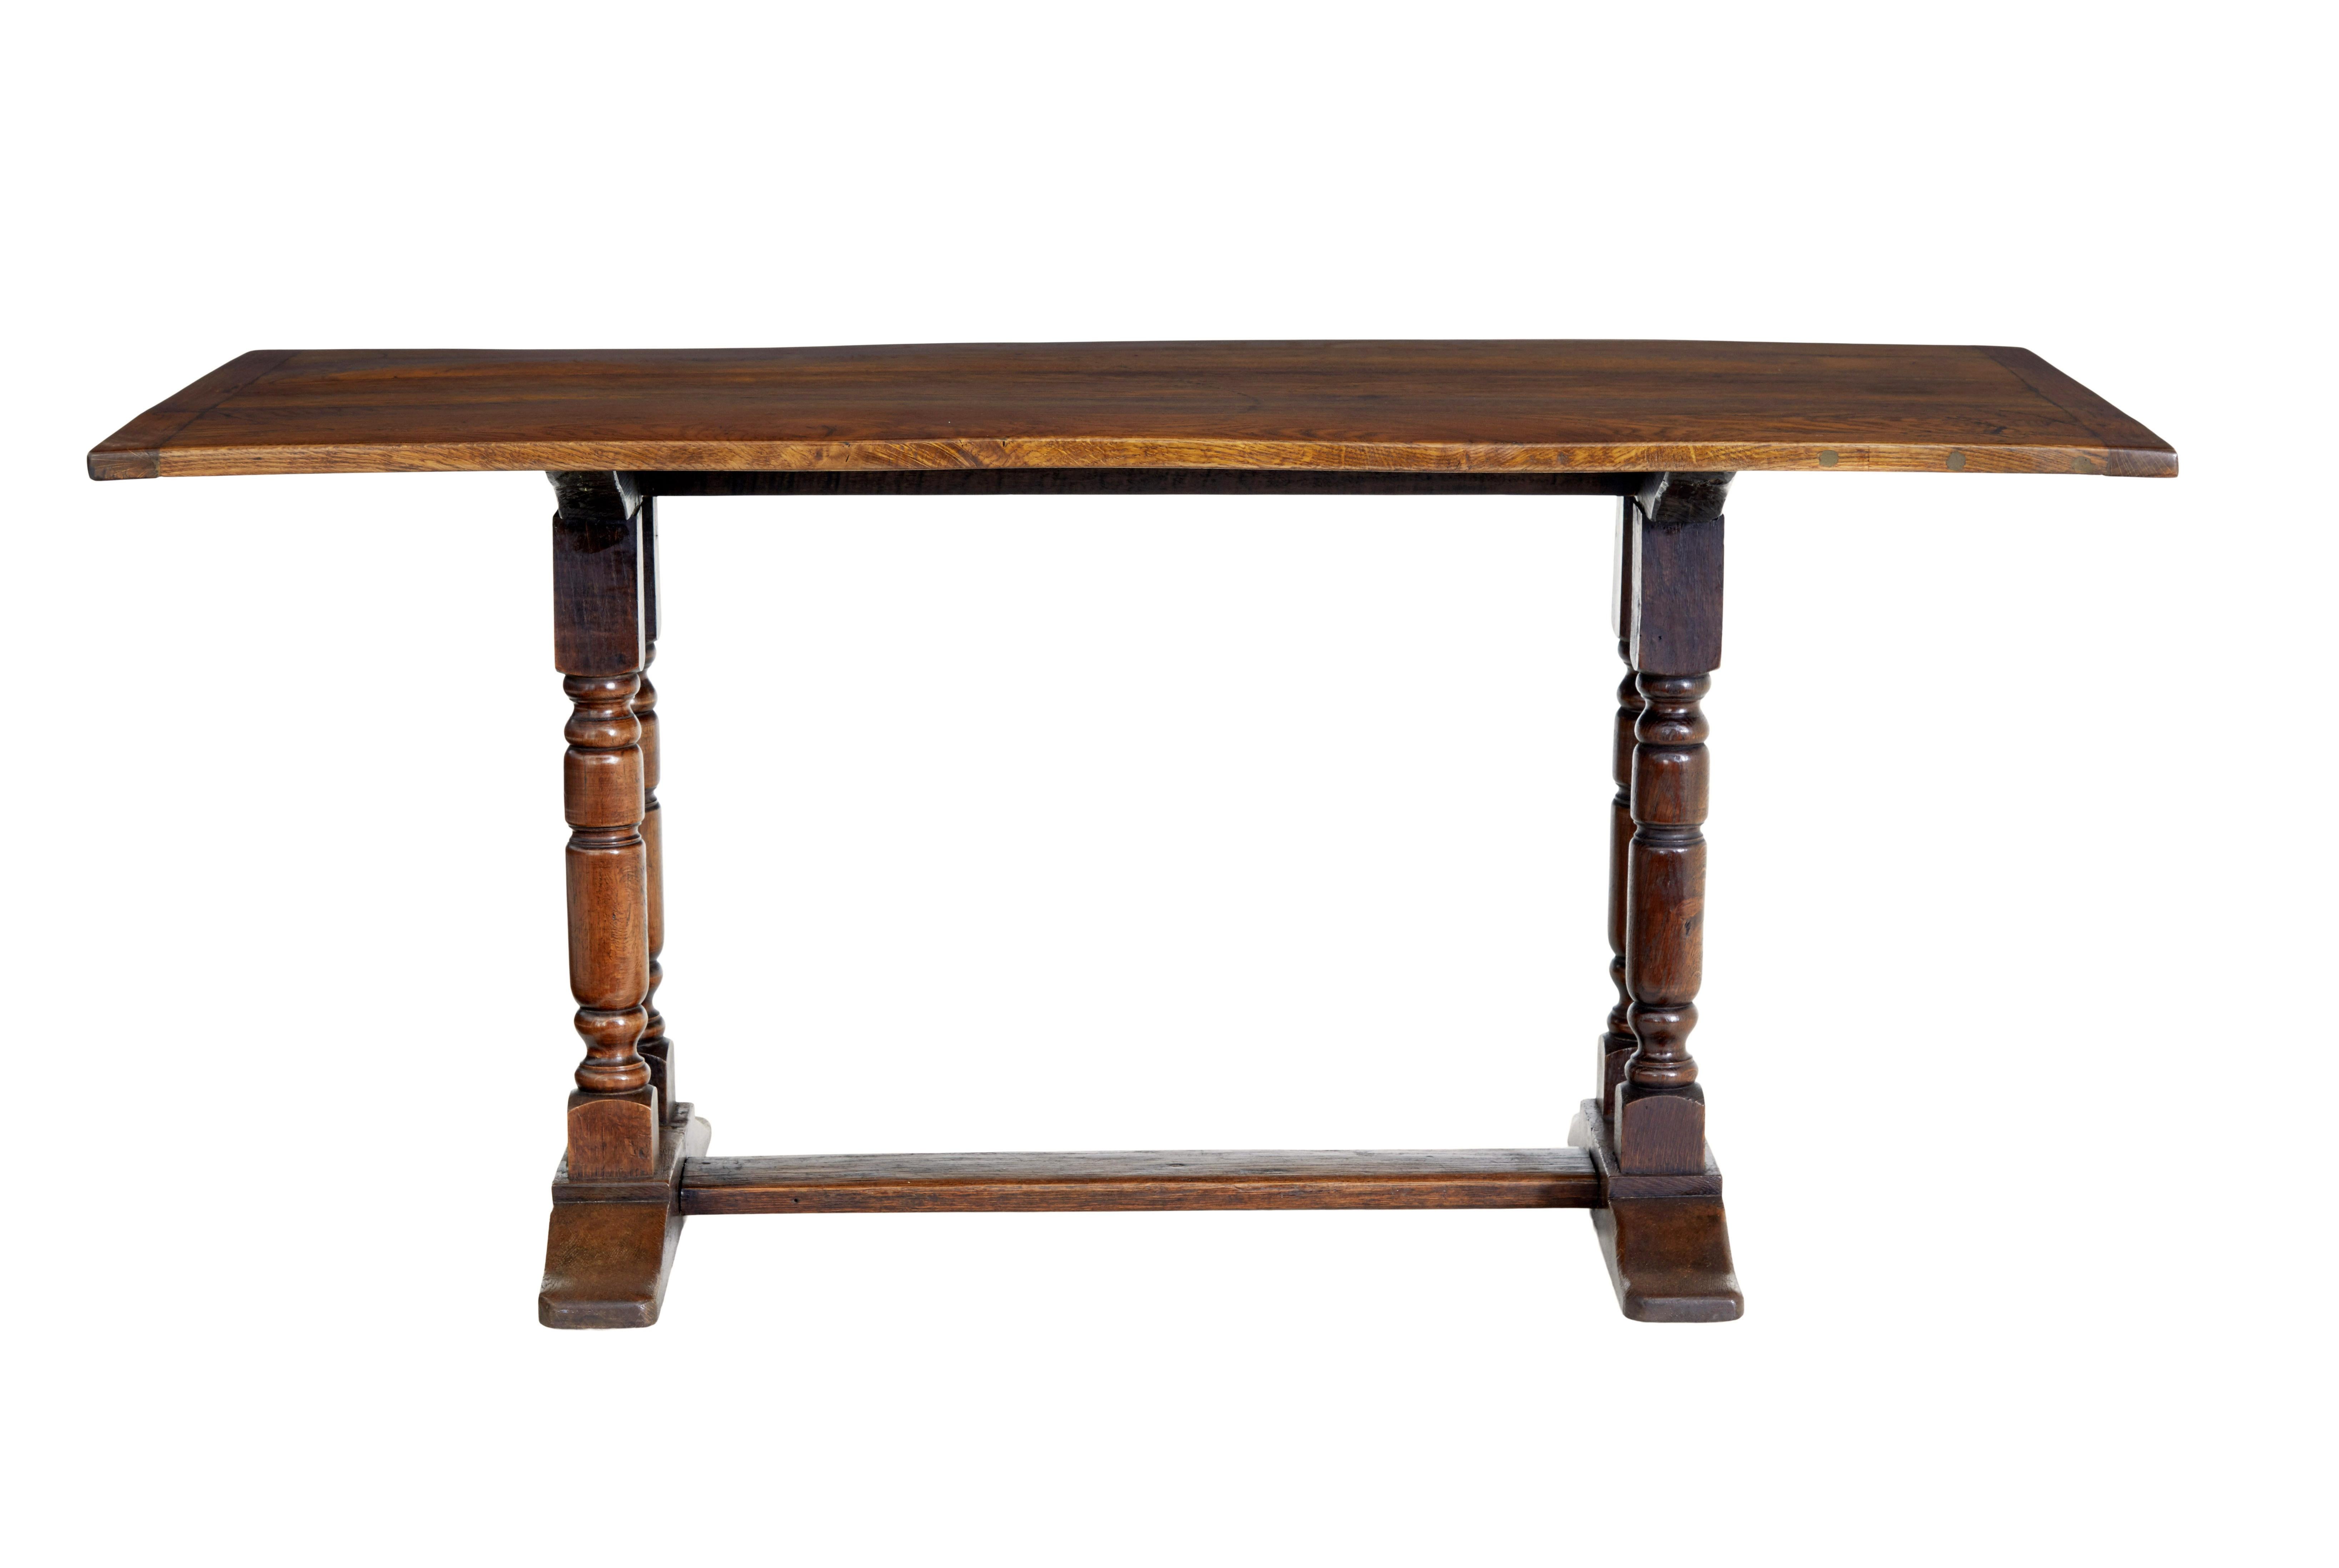 English Rustic 19th Century oak dining table